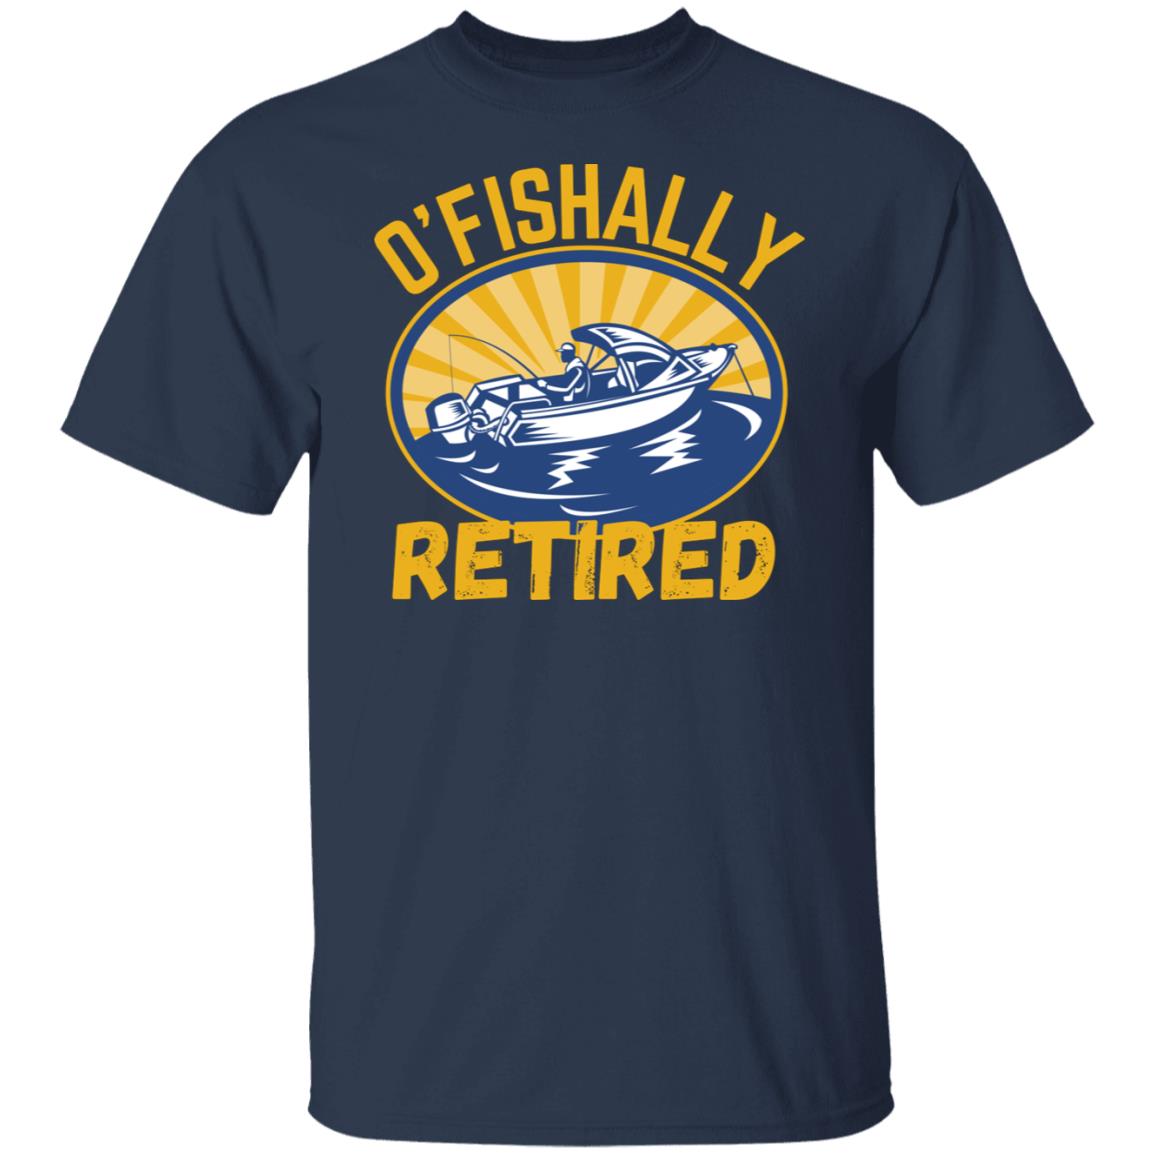 O'Fishally RETIRED Fishing Sports Fisherman Father Boat Boating Water Sports Retirement  T-Shirt